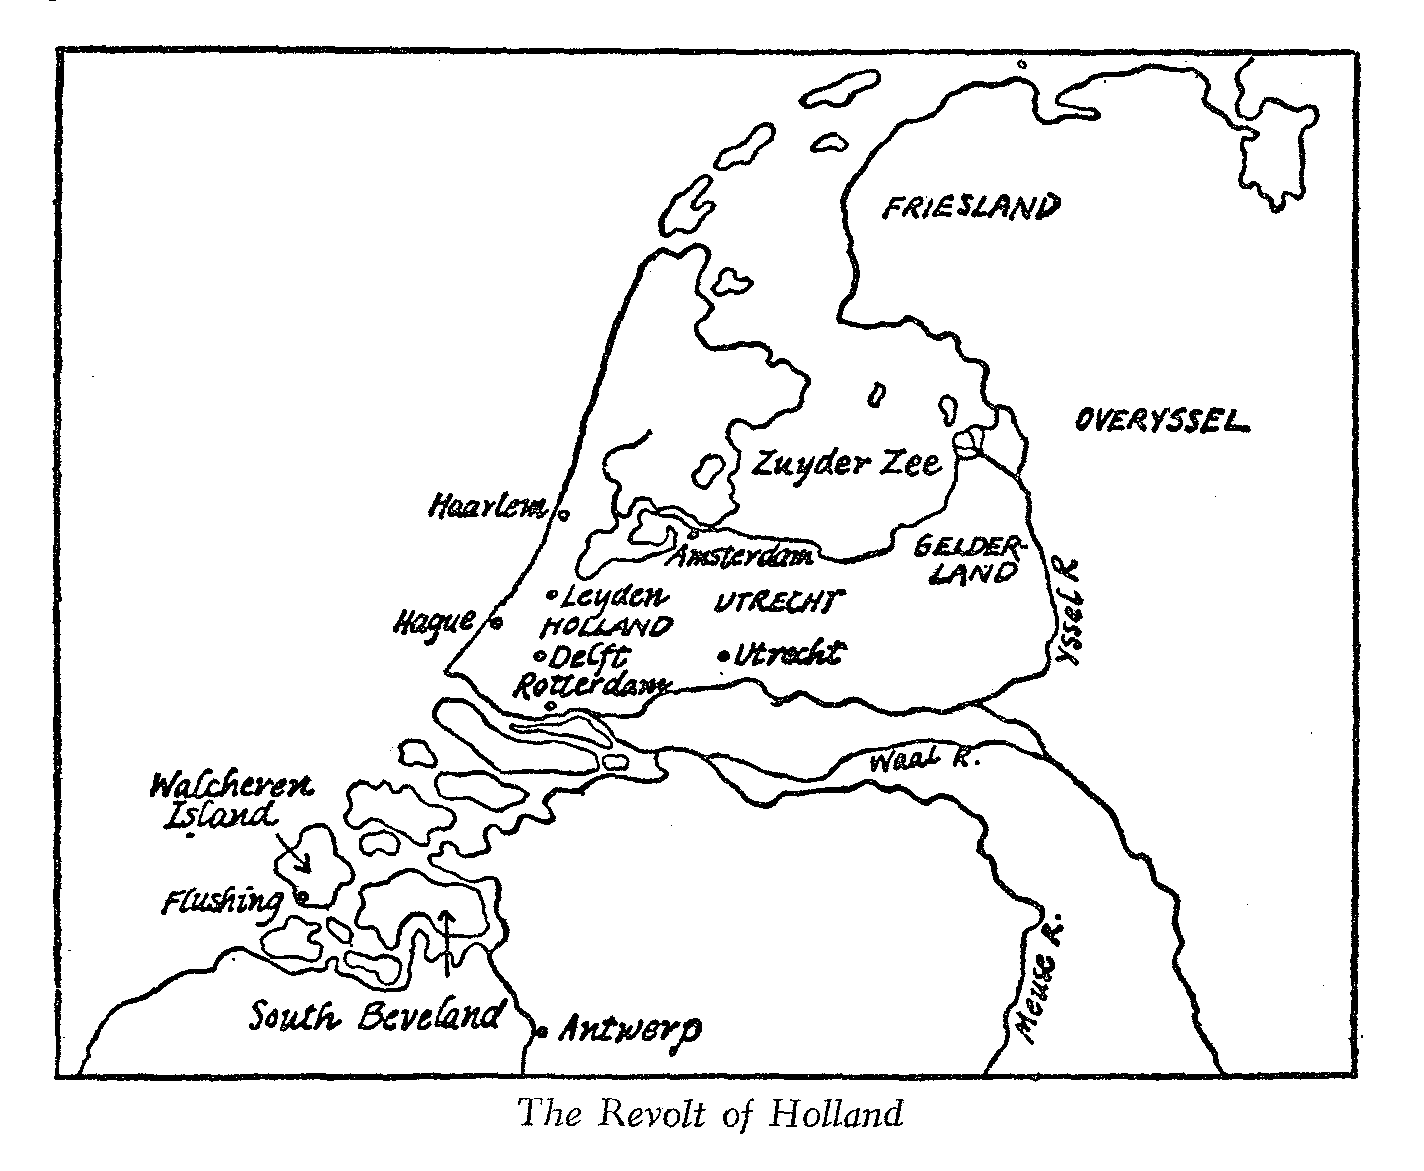 The Revolt of Holland